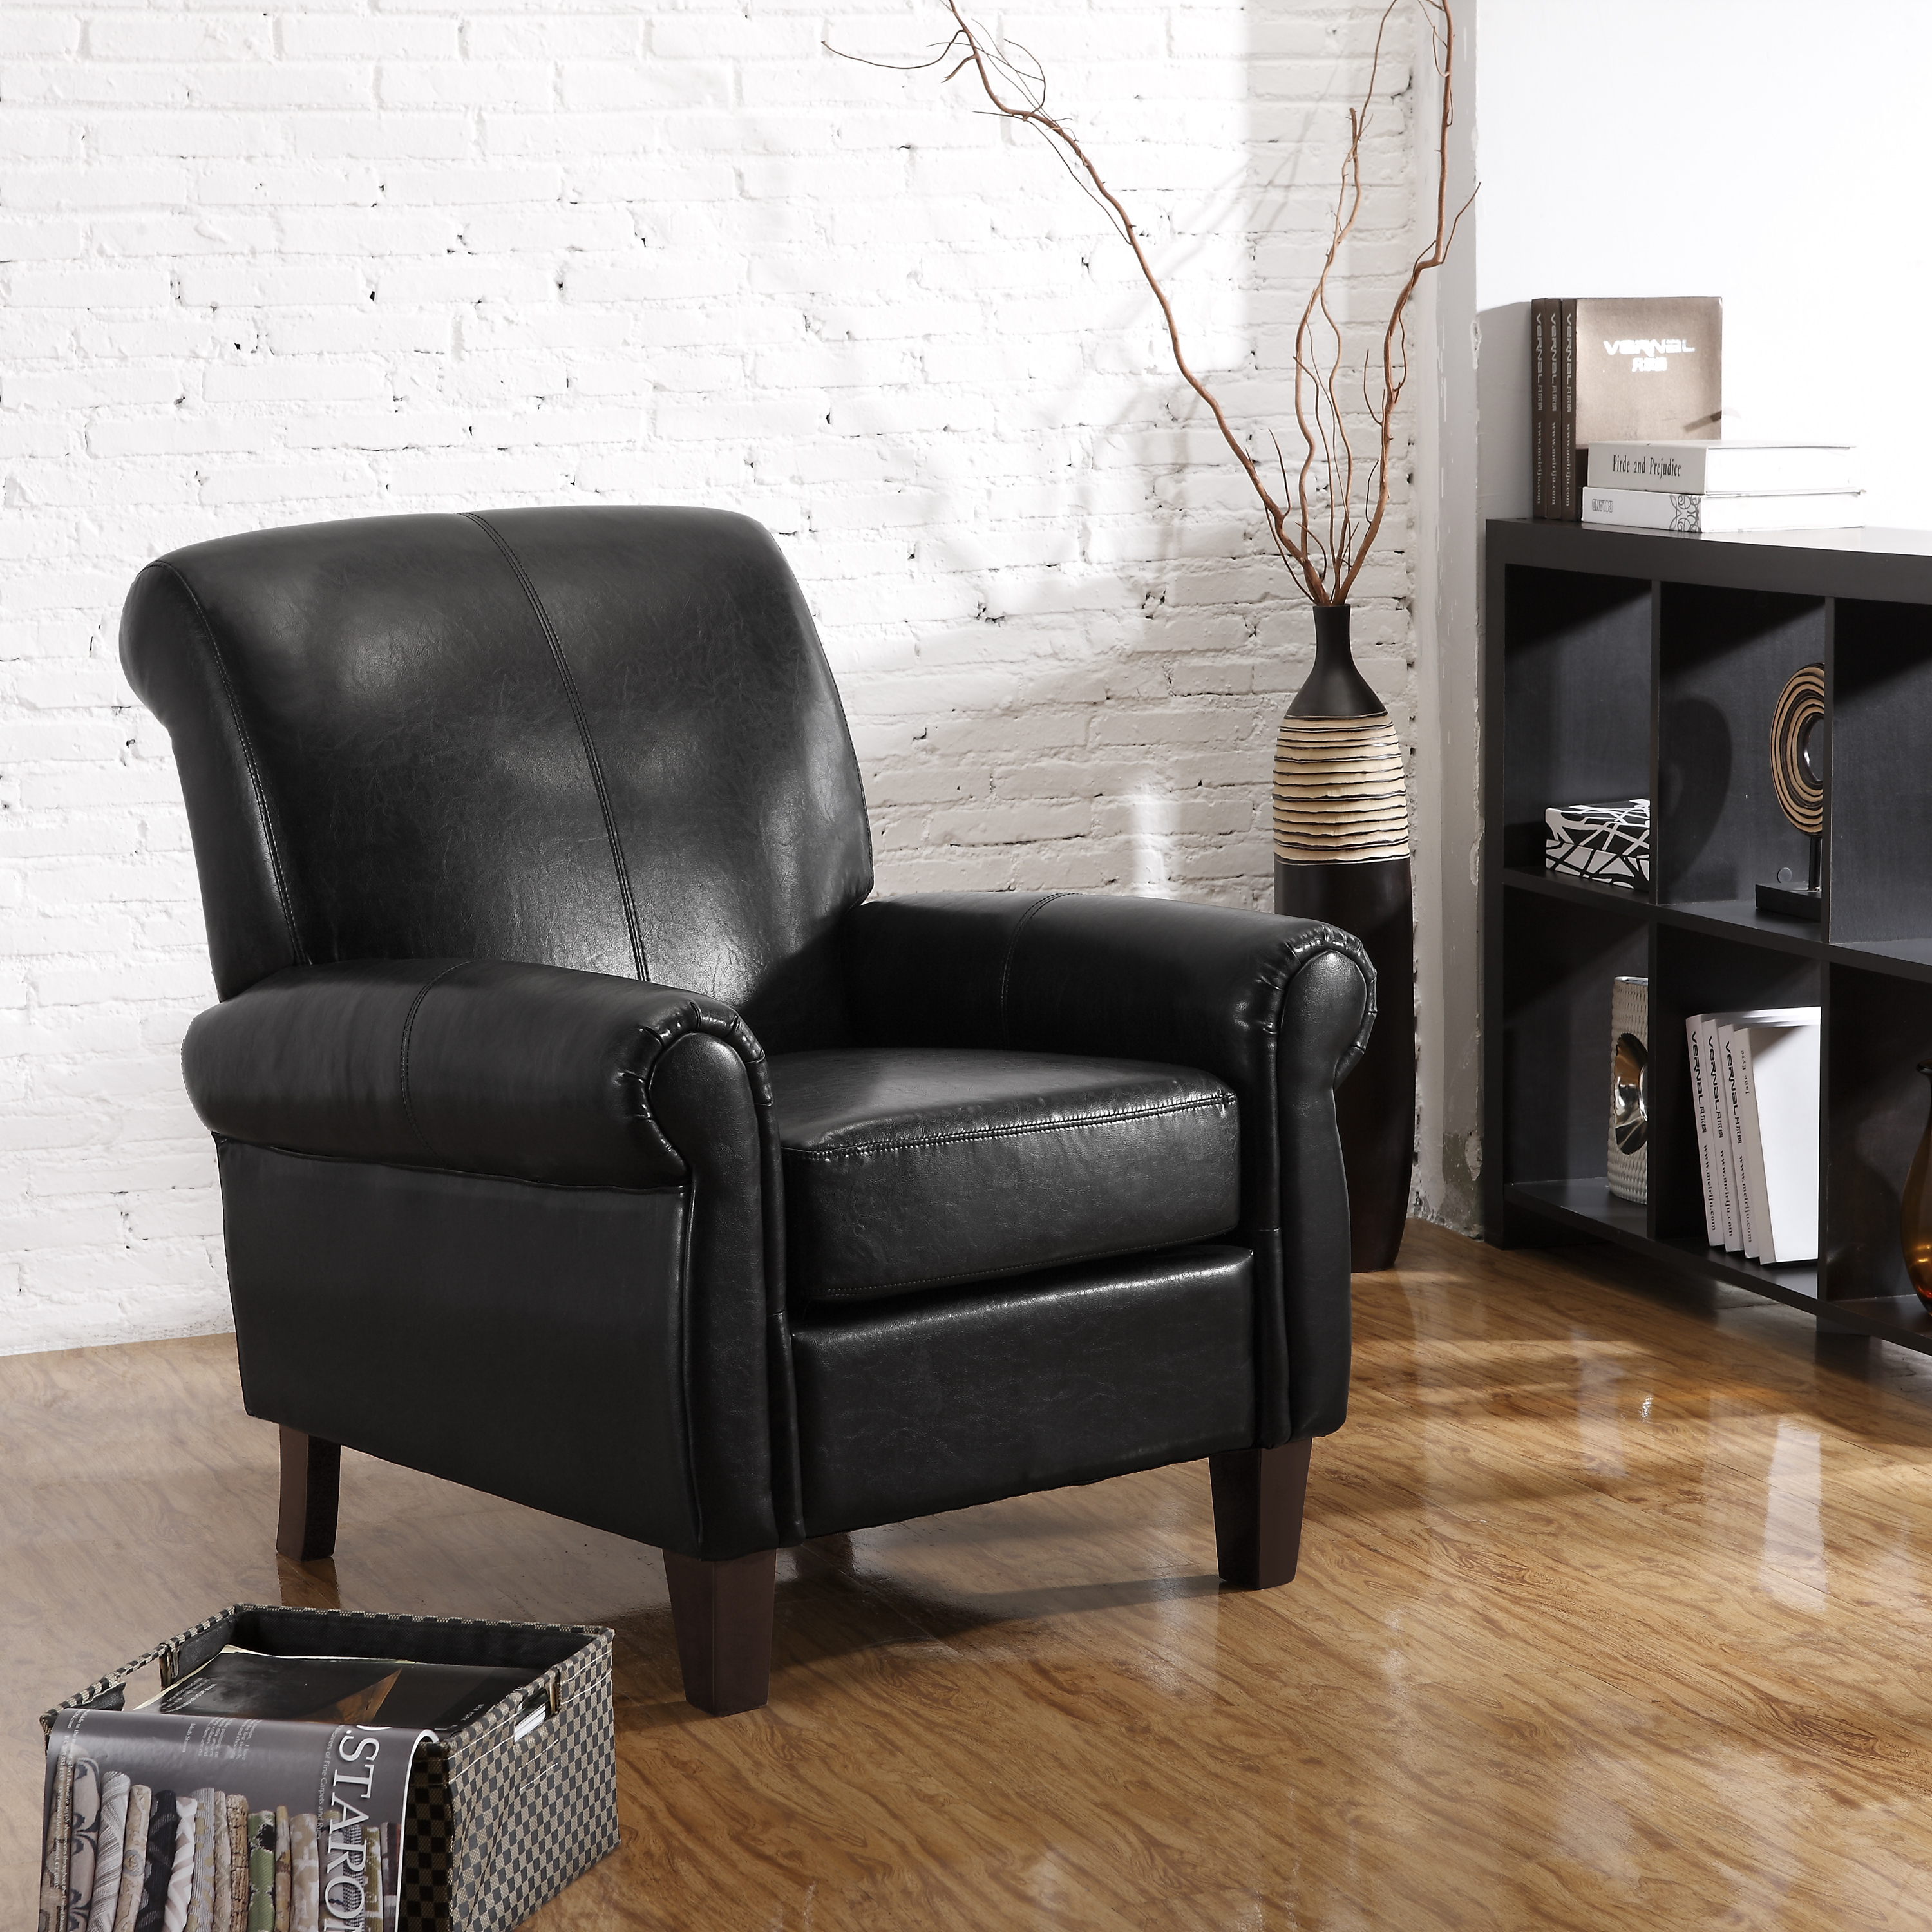 Dorel Home Furnishings Black Faux Leather Club Chair